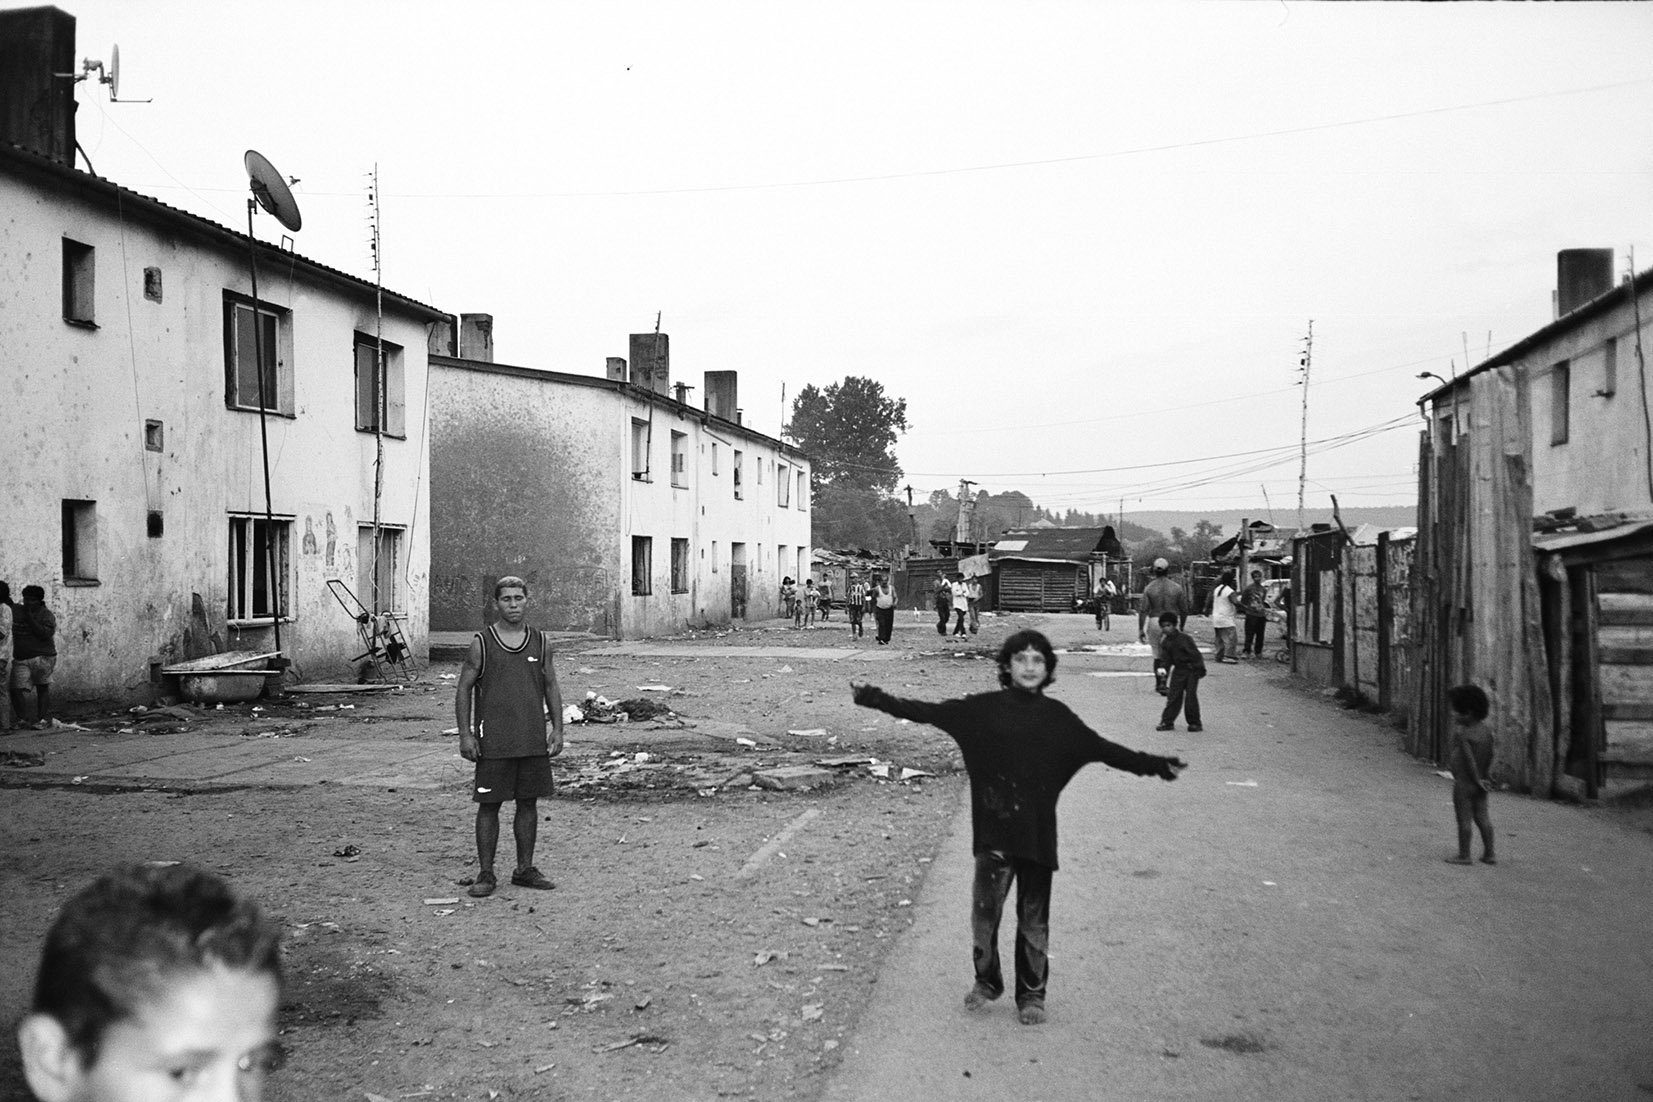  Settlement for the Roma, Svinia, Slovakia/ 2004 